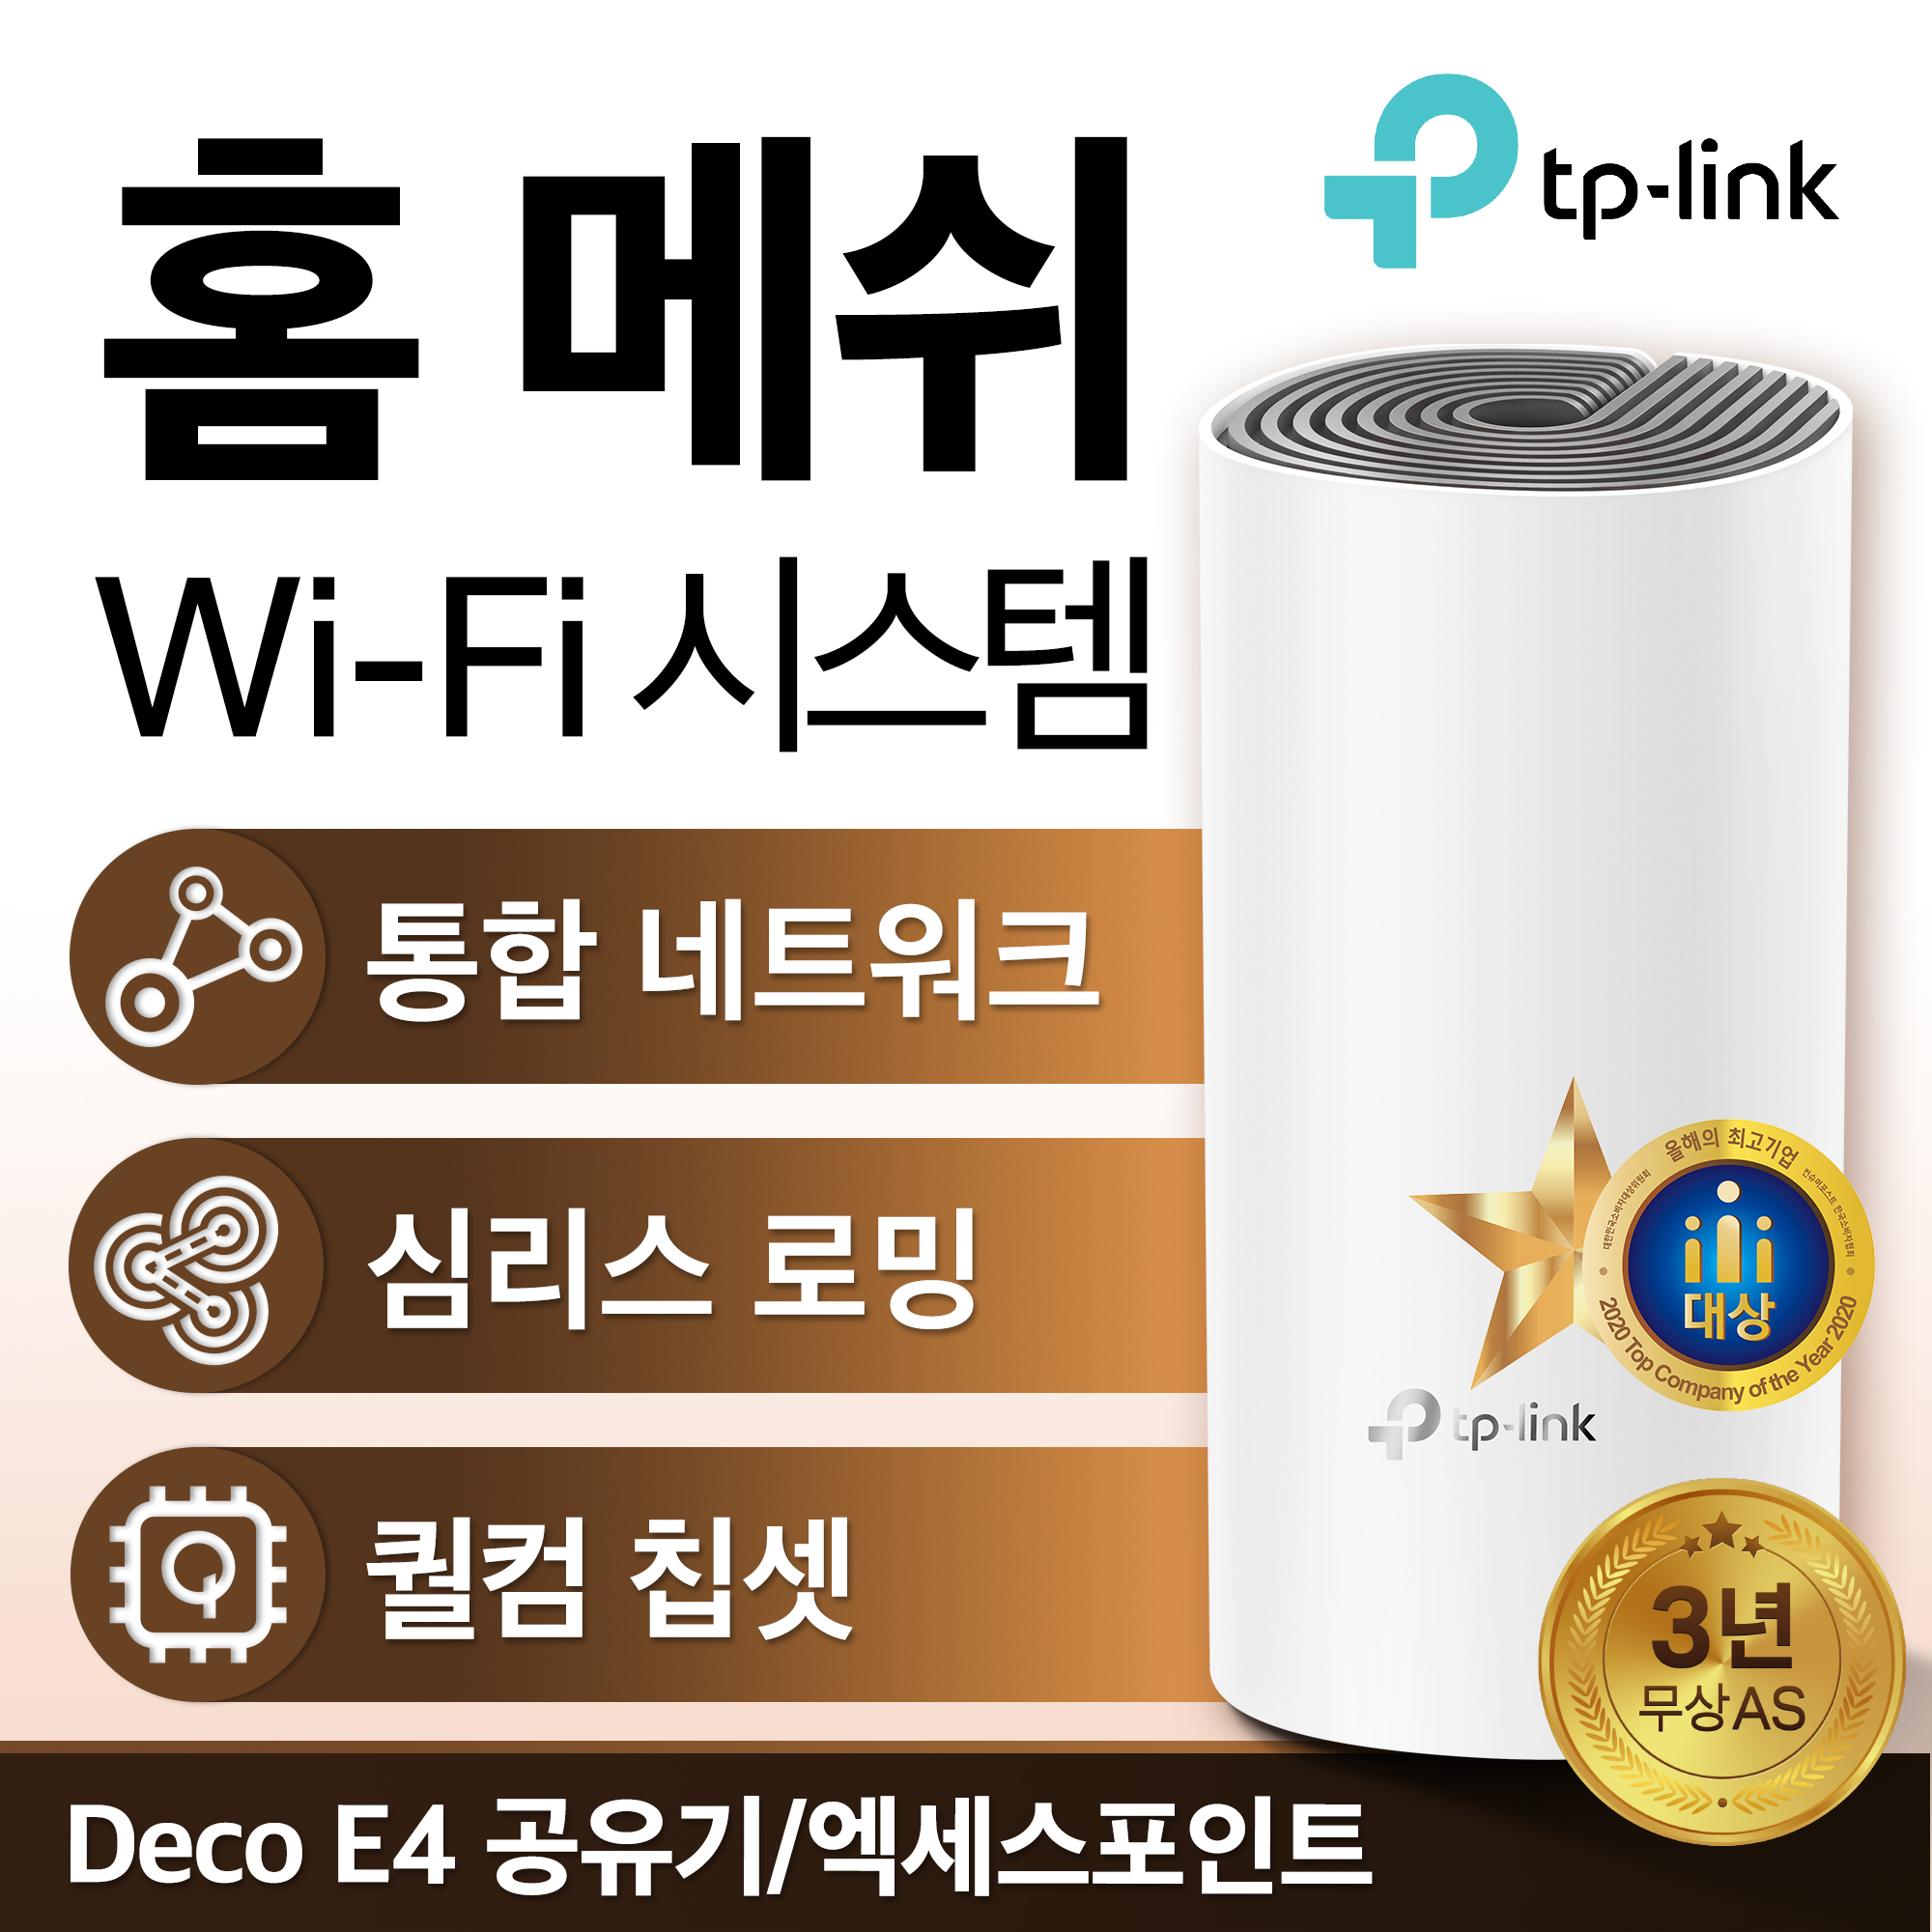 [TP-LINK] 티피링크 Deco E4 1P AC1200 홈 메쉬 Wi-Fi 시스템